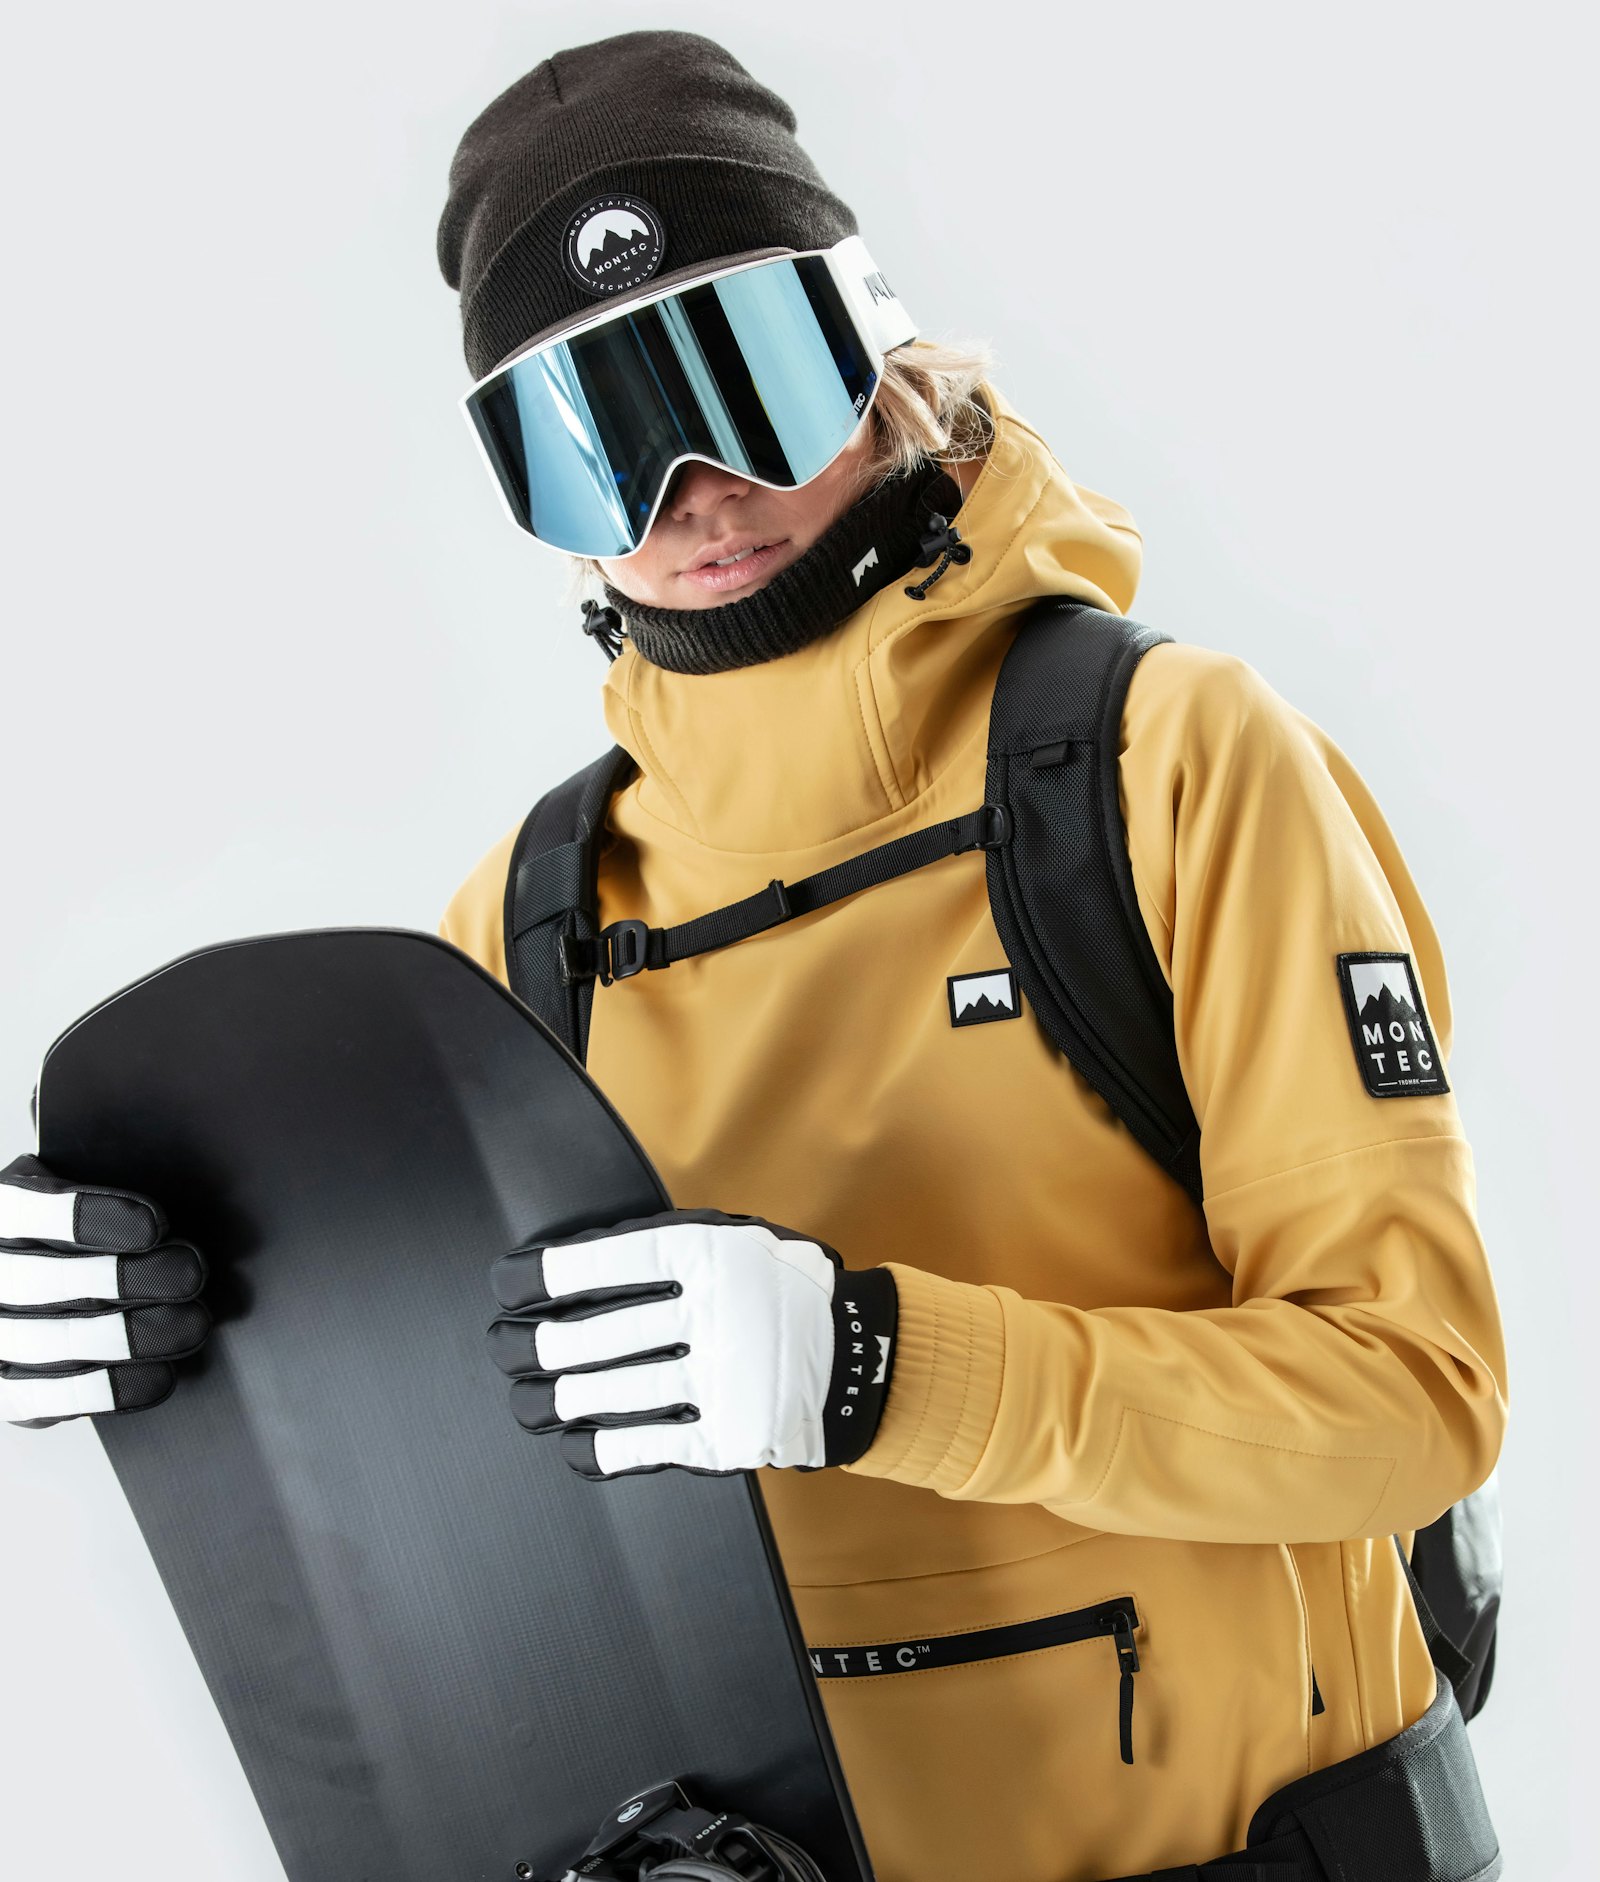 Tempest W 2020 Veste Snowboard Femme Yellow